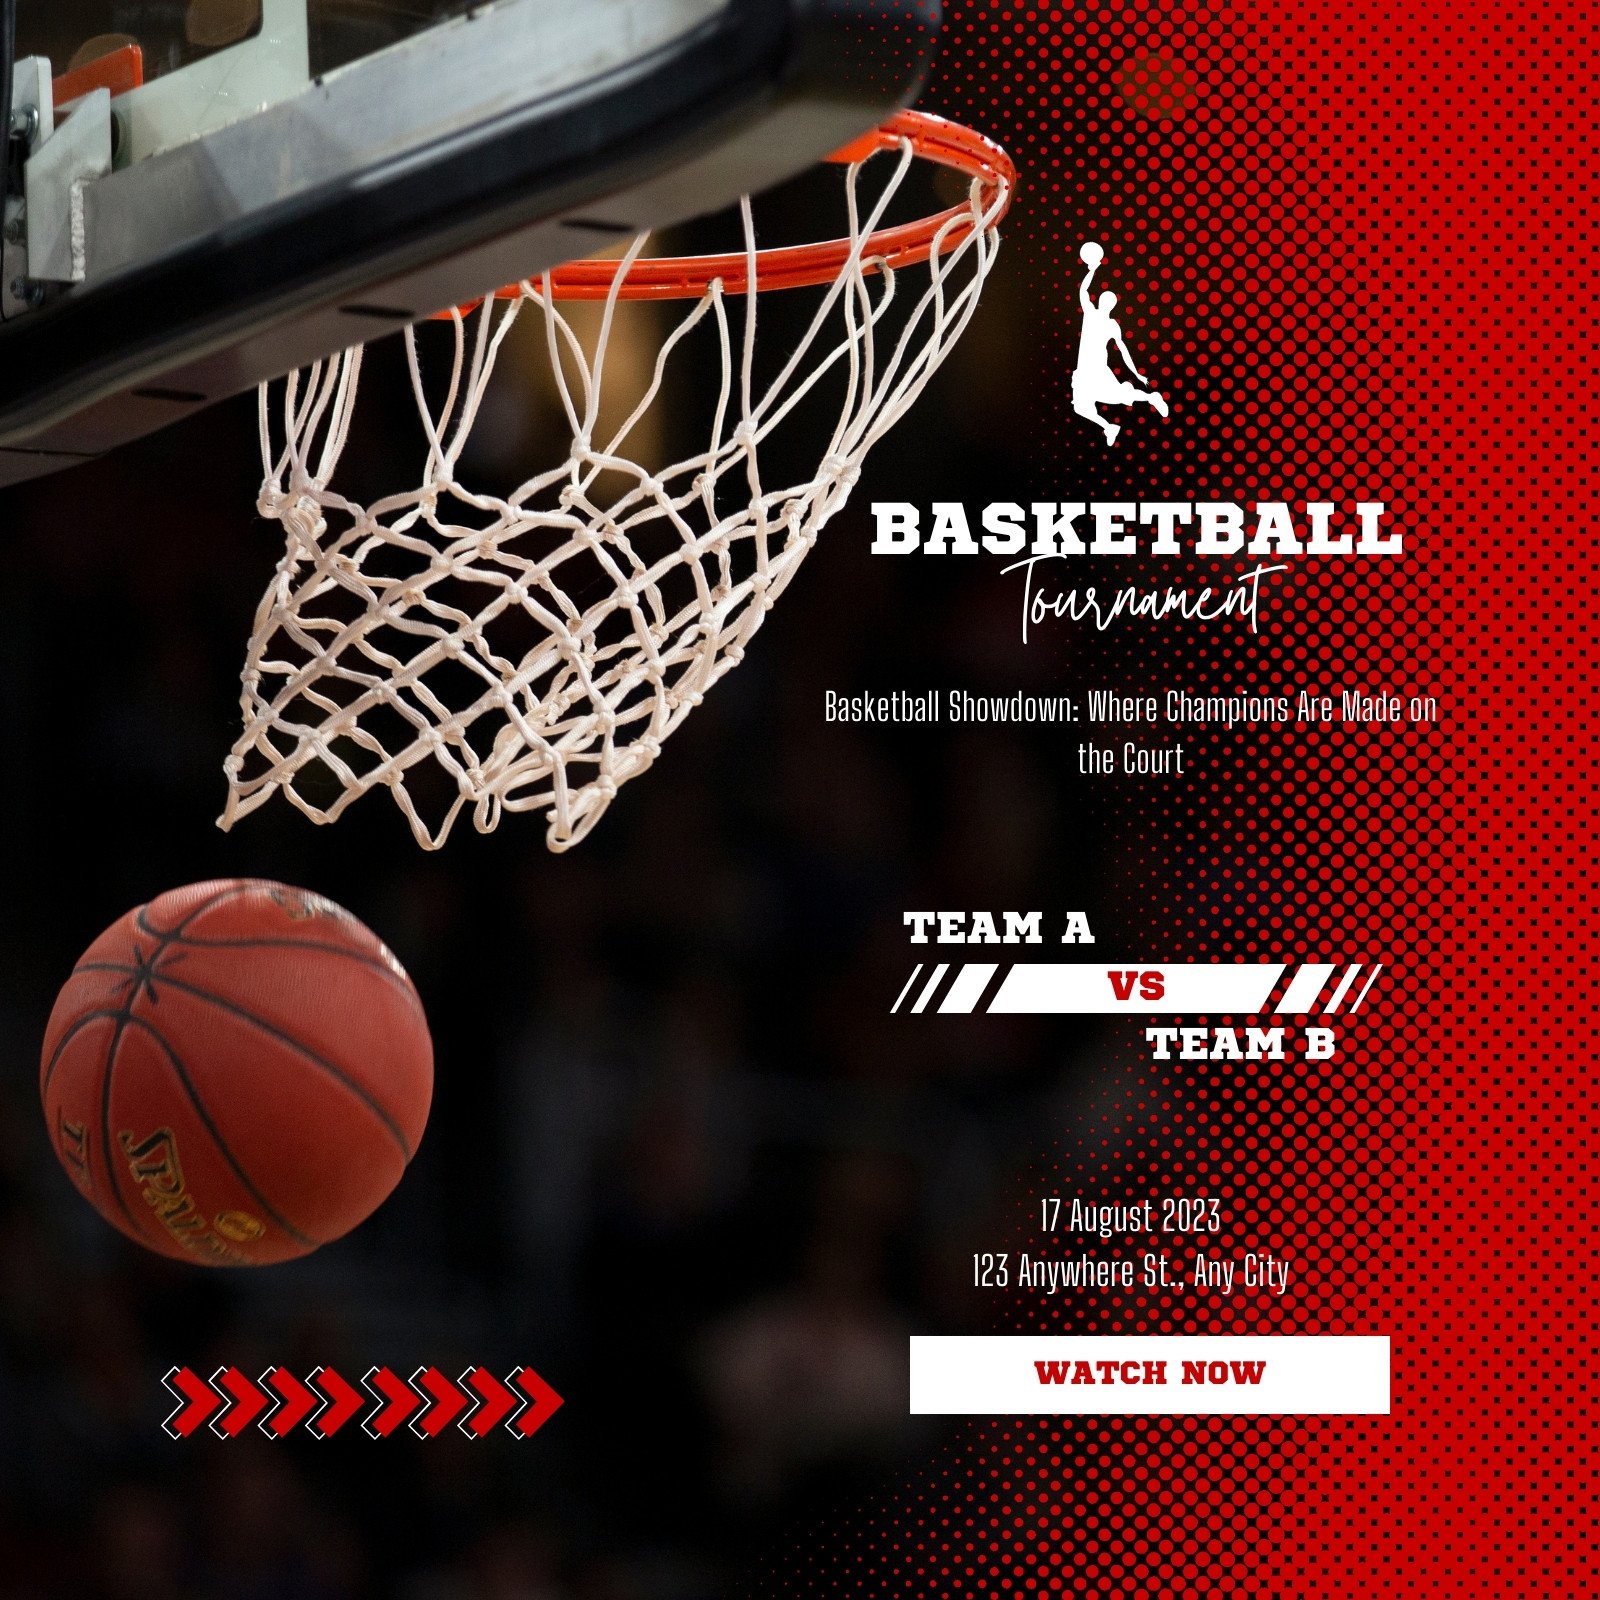 Free and customizable basketball templates